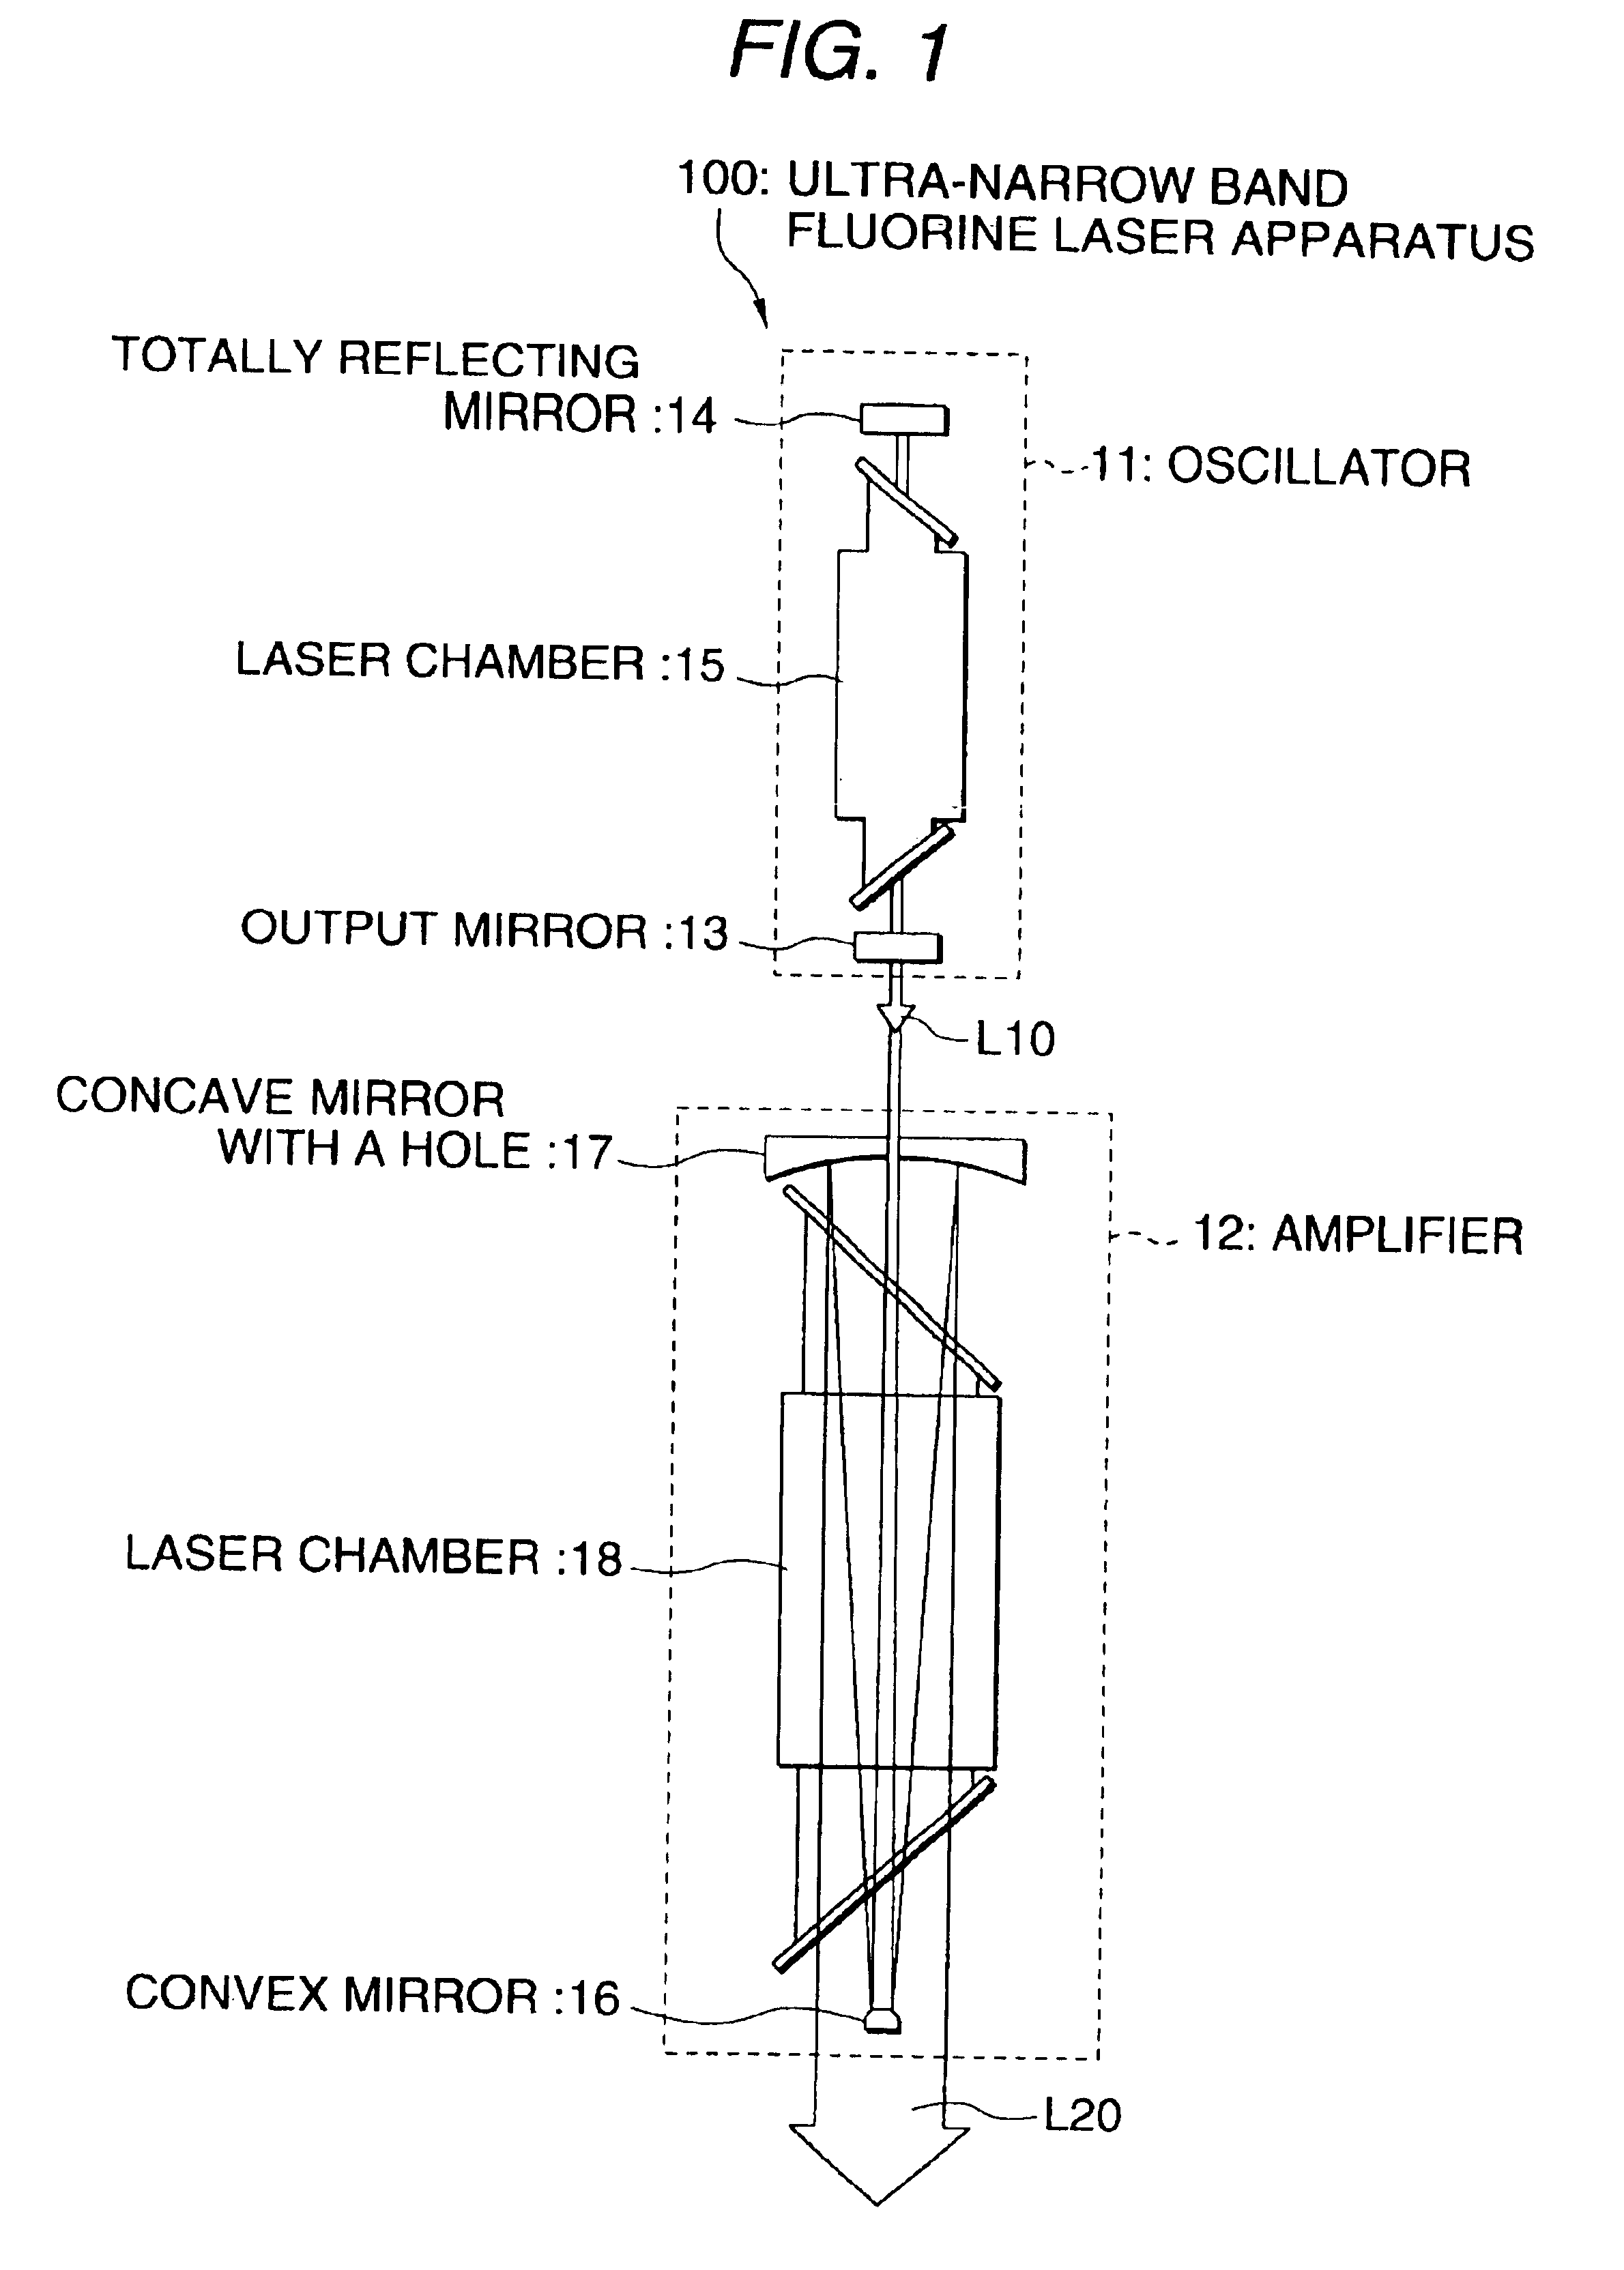 Ultra-narrow band flourine laser apparatus